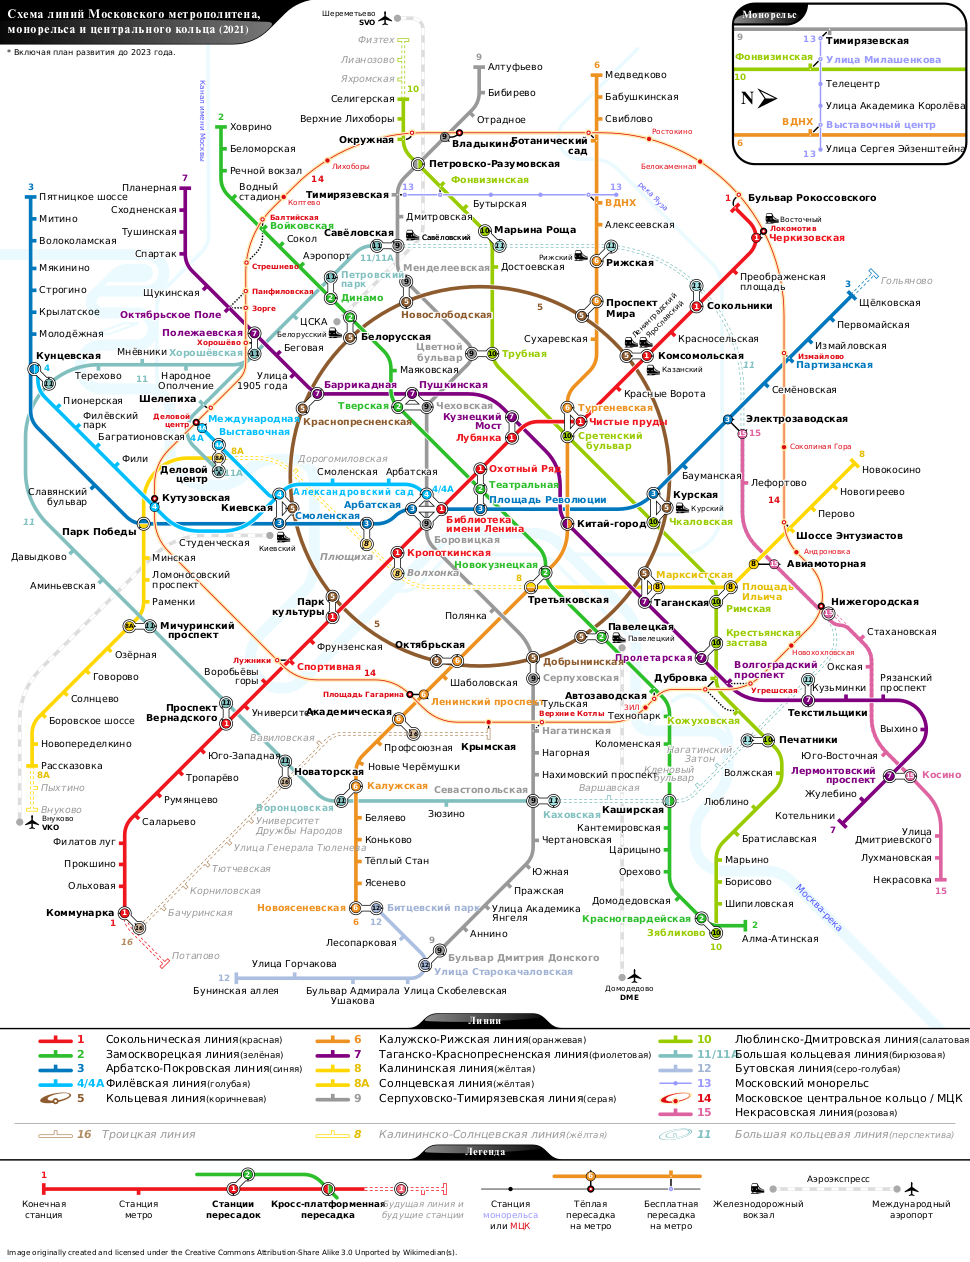 Moscow metro ring railway map ru sb future.svg